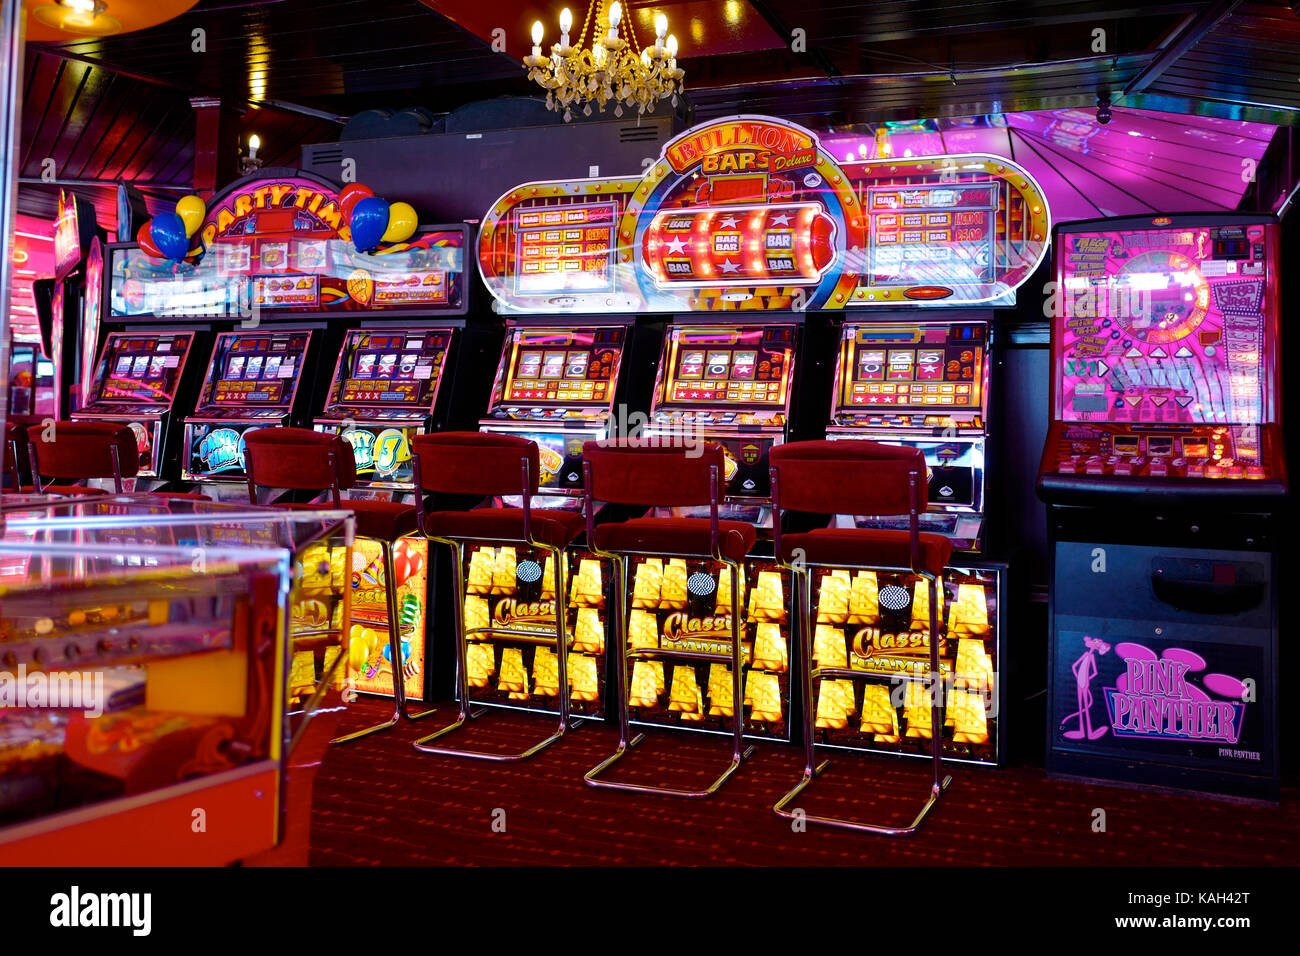 Gambling machines in amusement arcade, UK Stock Photo